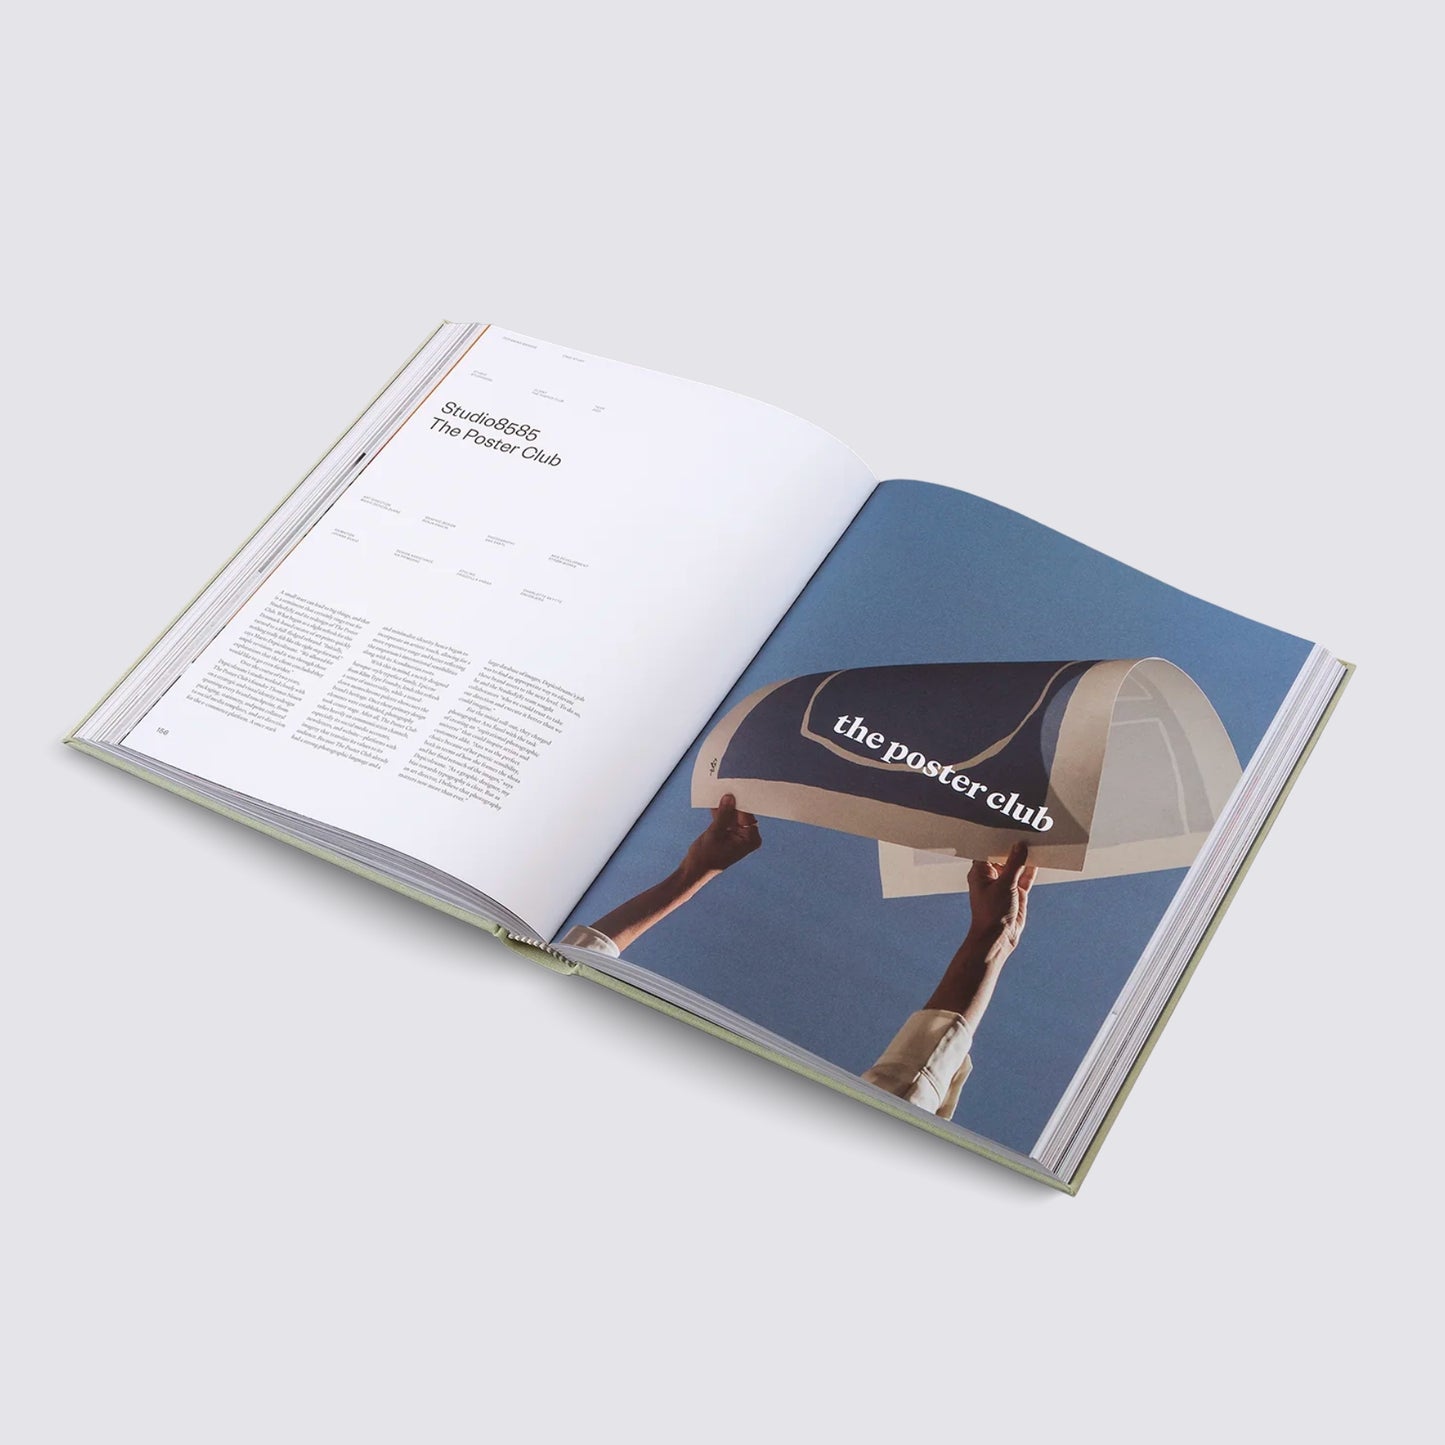 Designing Brands book